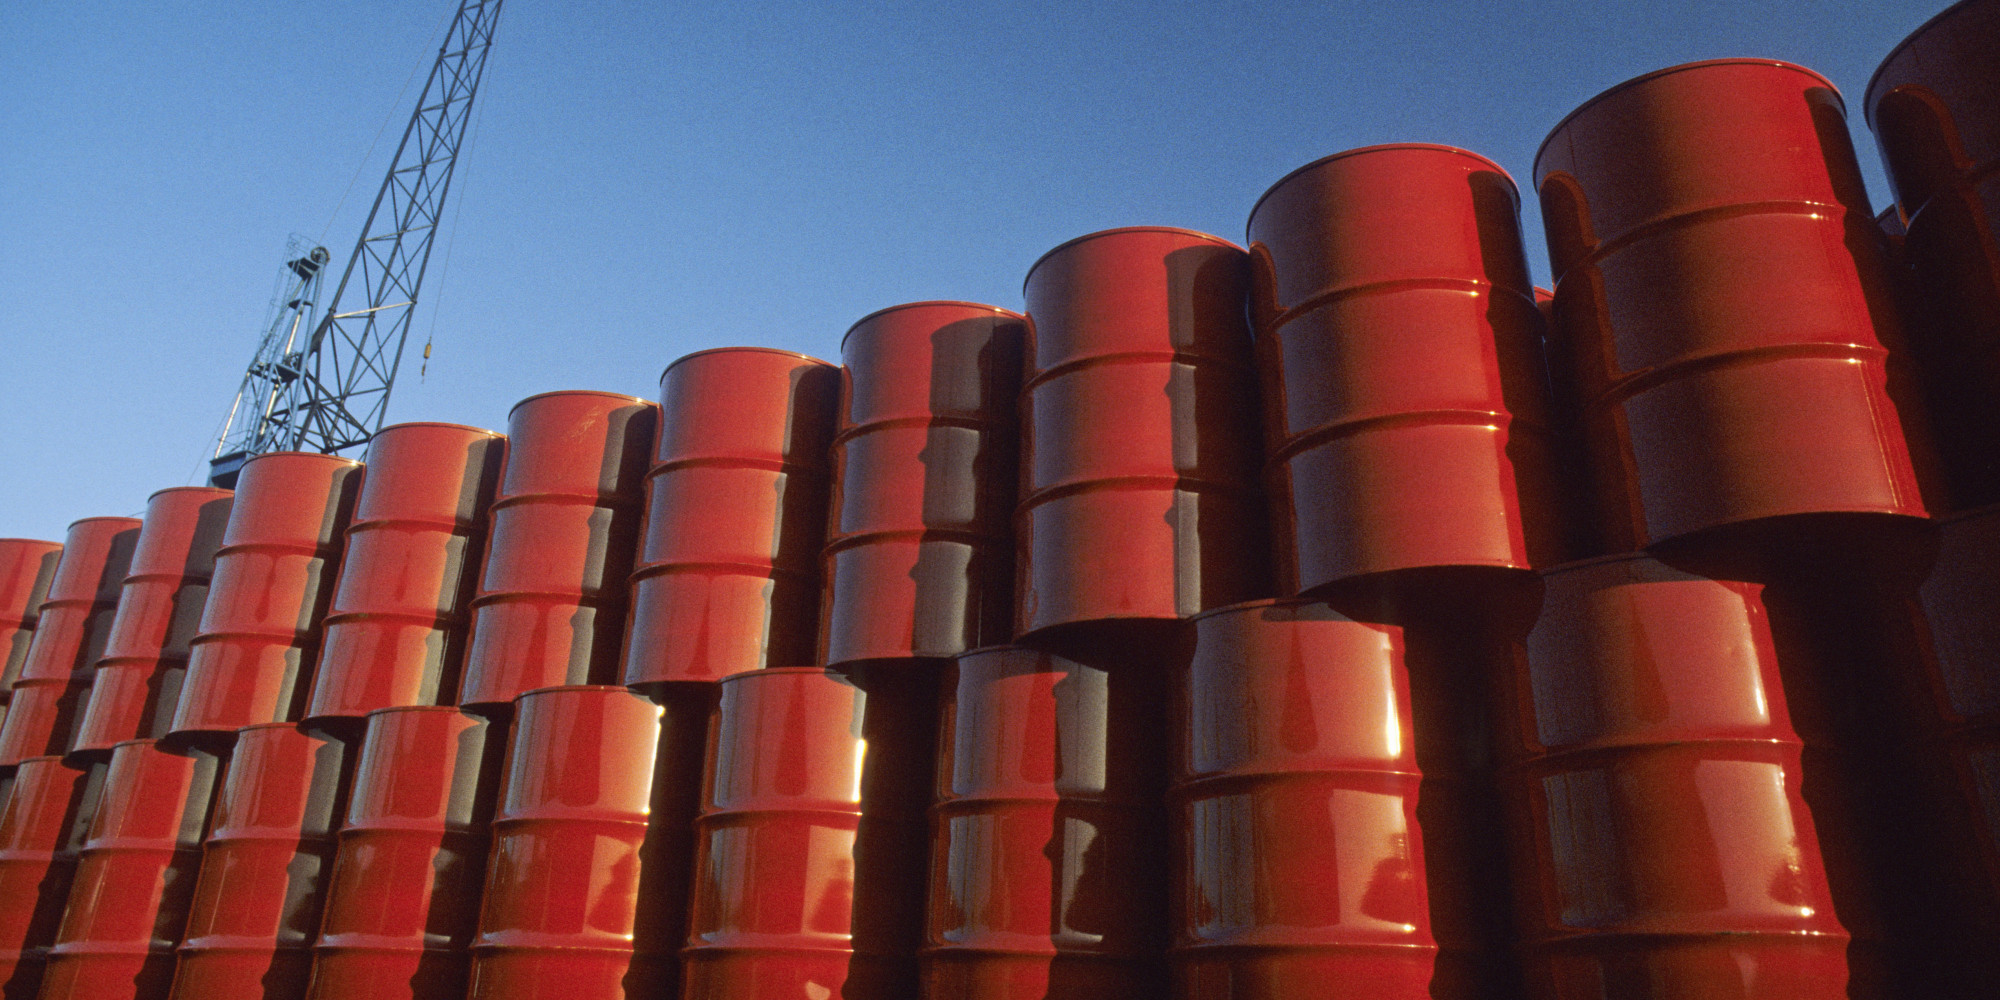 Volatile Oil Prices: What Should Investors Do?